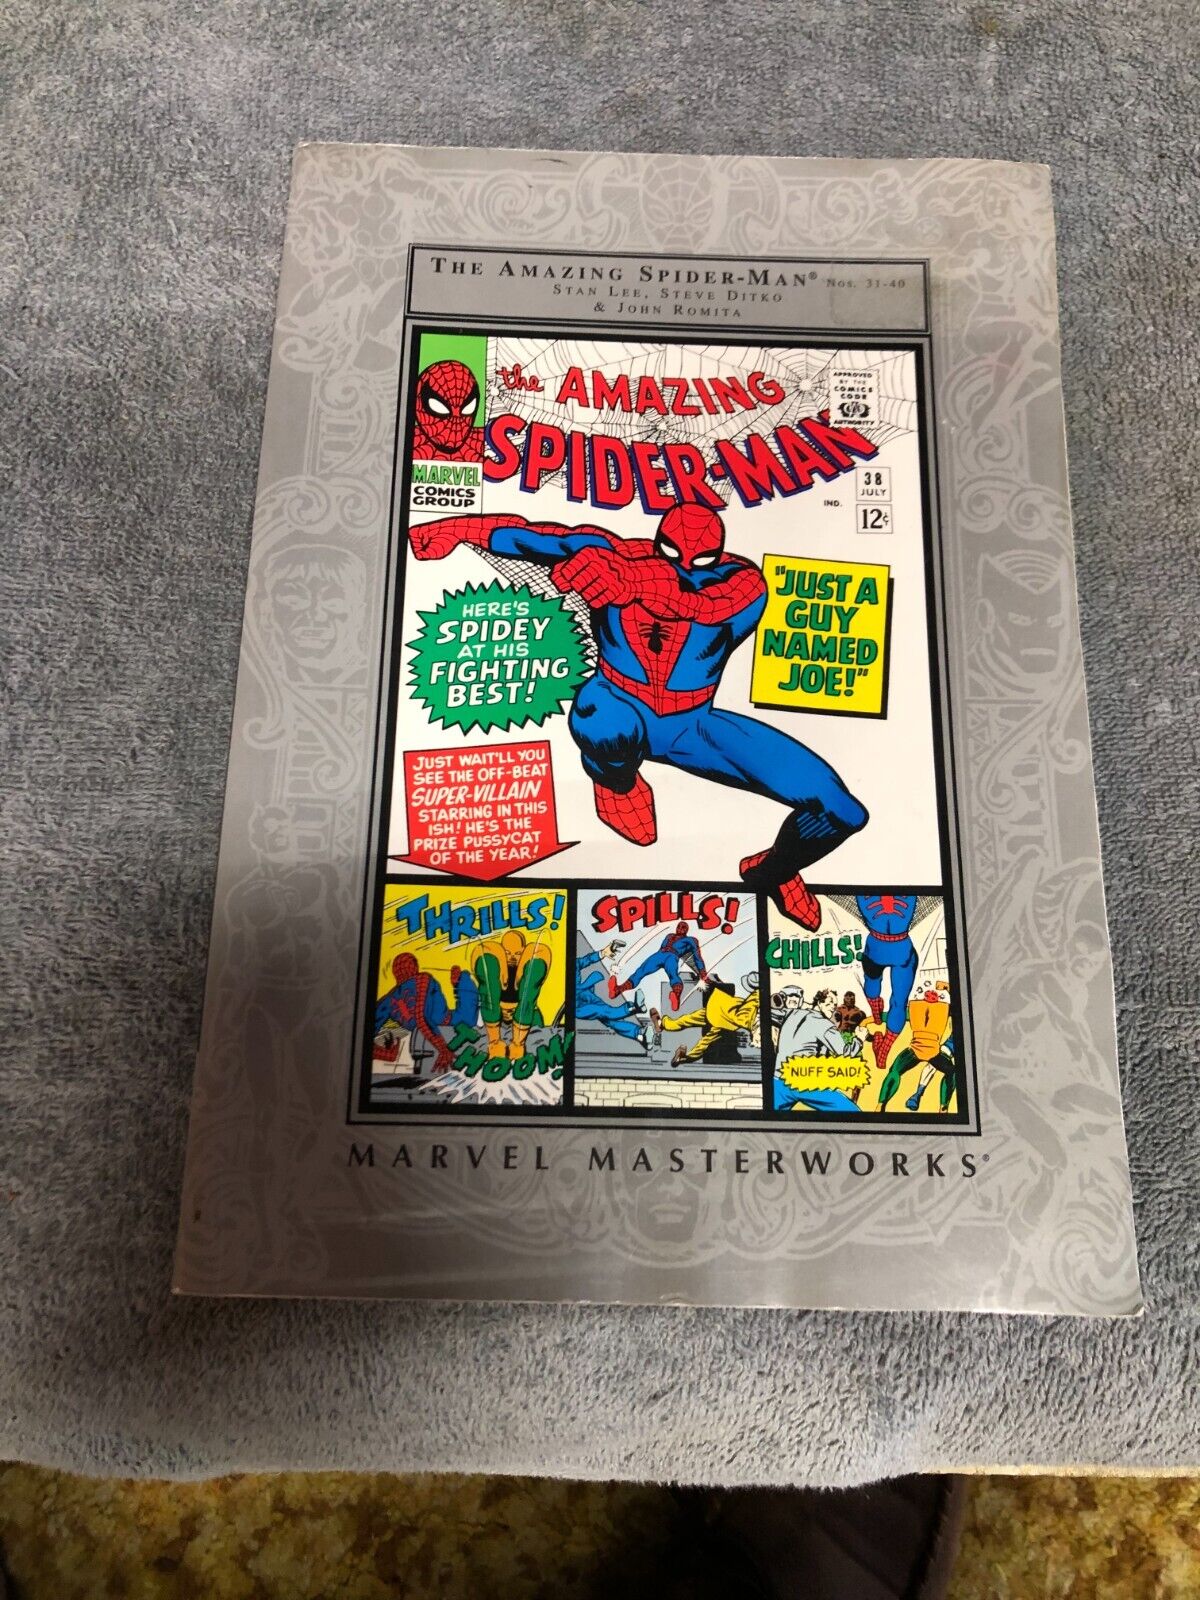 Marvel Masterworks The Amazing Spiderman # 4 Nos 31-40 $16.00